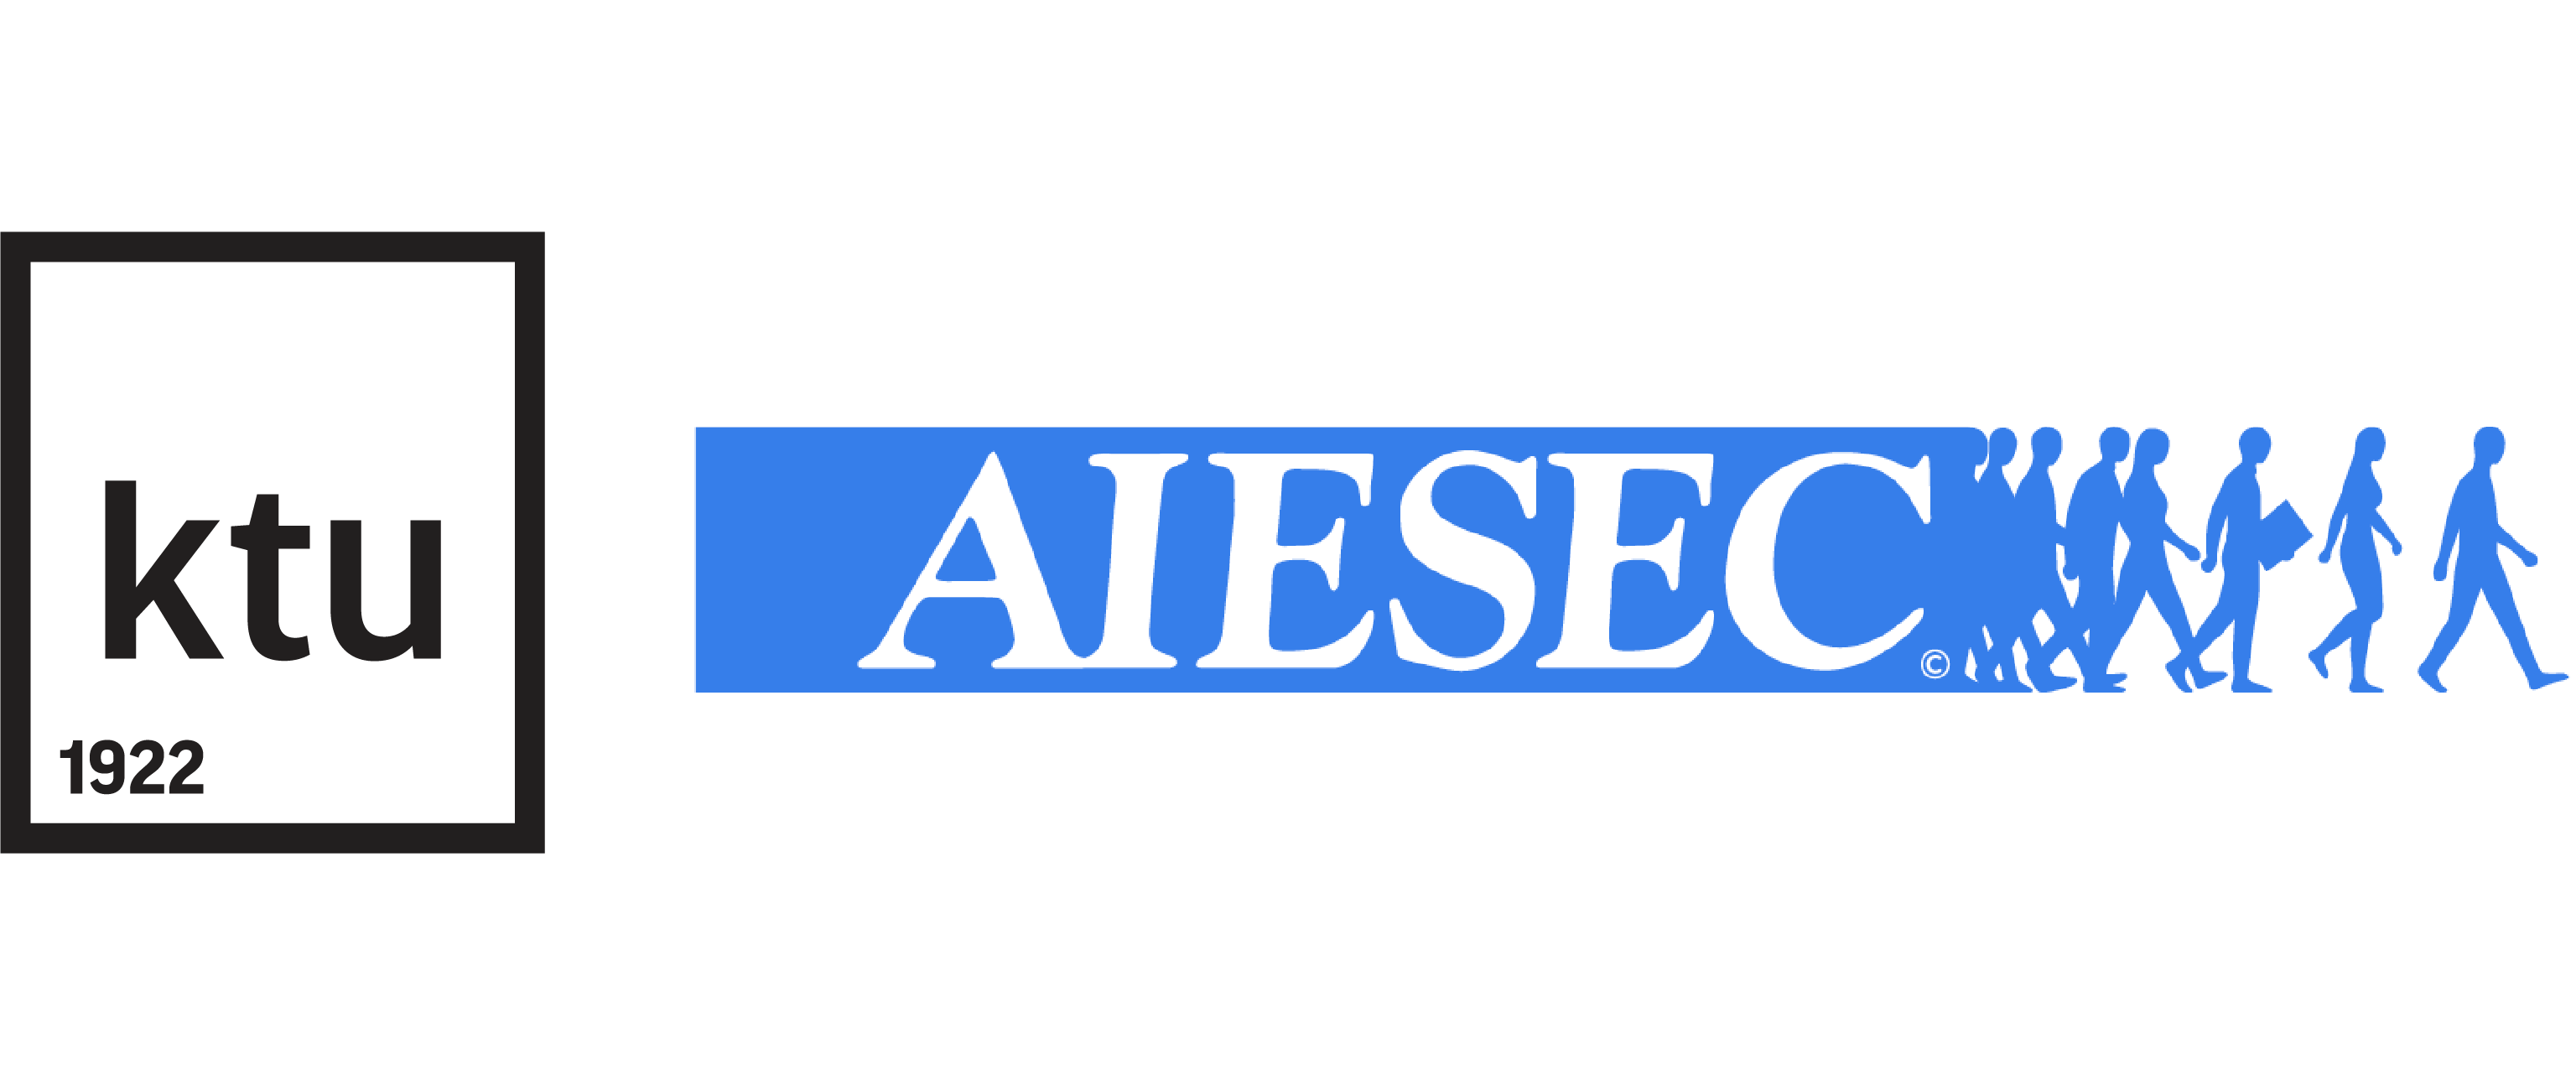 90.193.202.212 - AIESEC